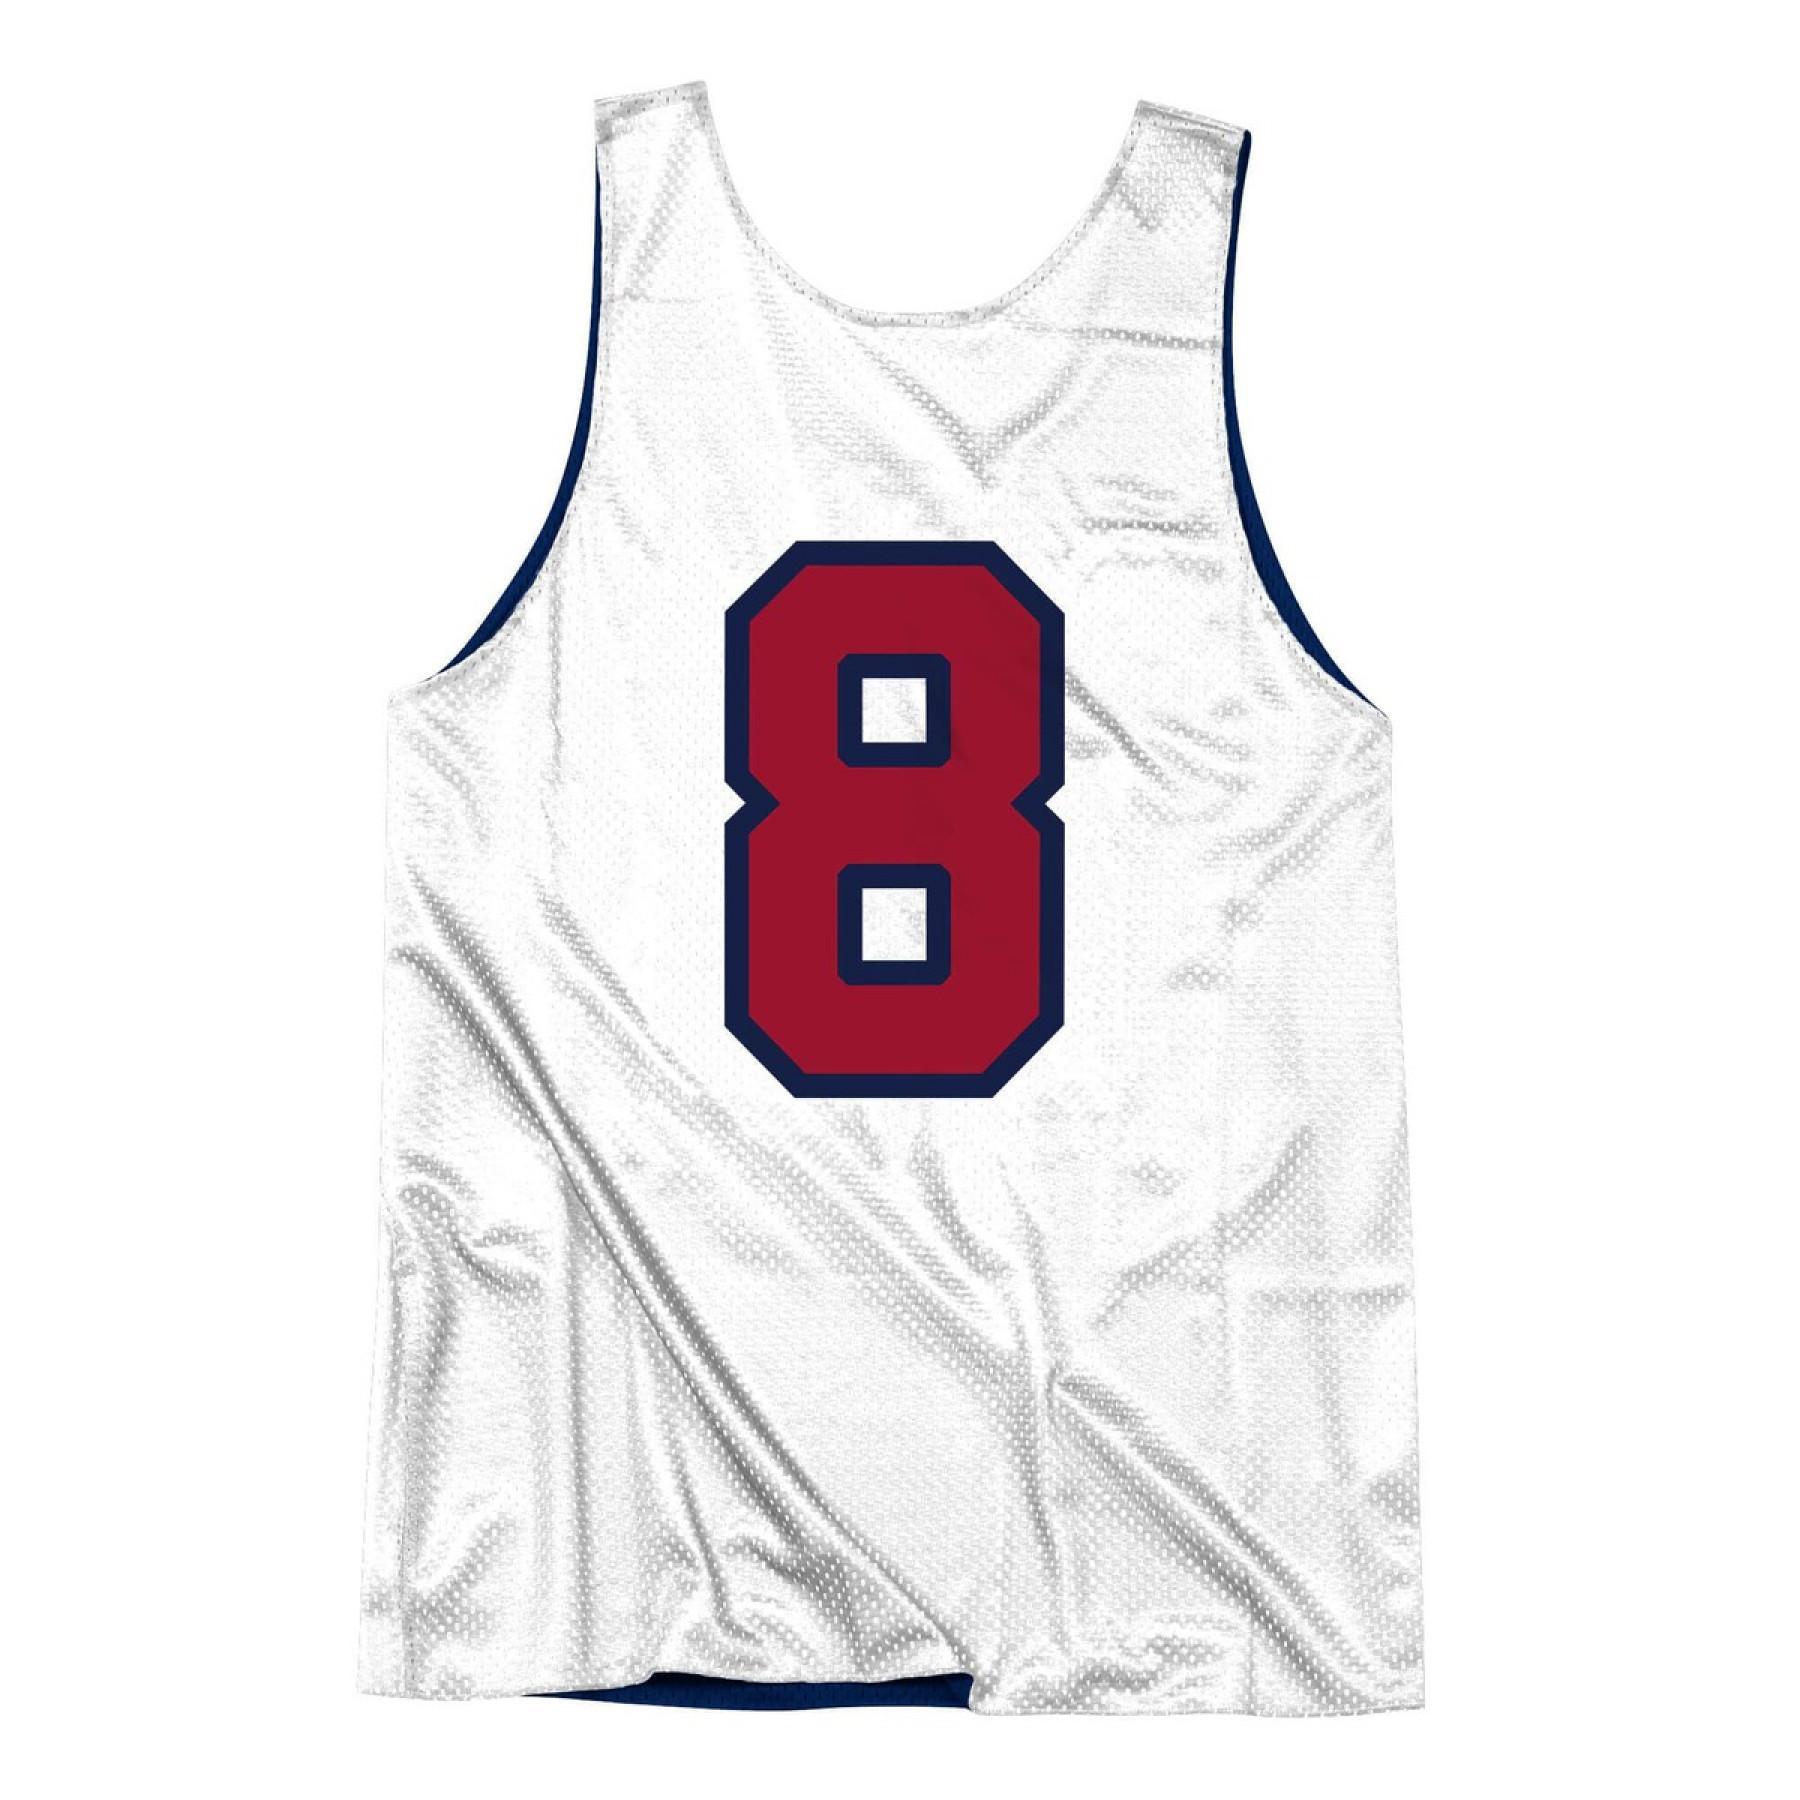 Autentyczna koszulka drużyny USA reversible practice Scottie Pippen